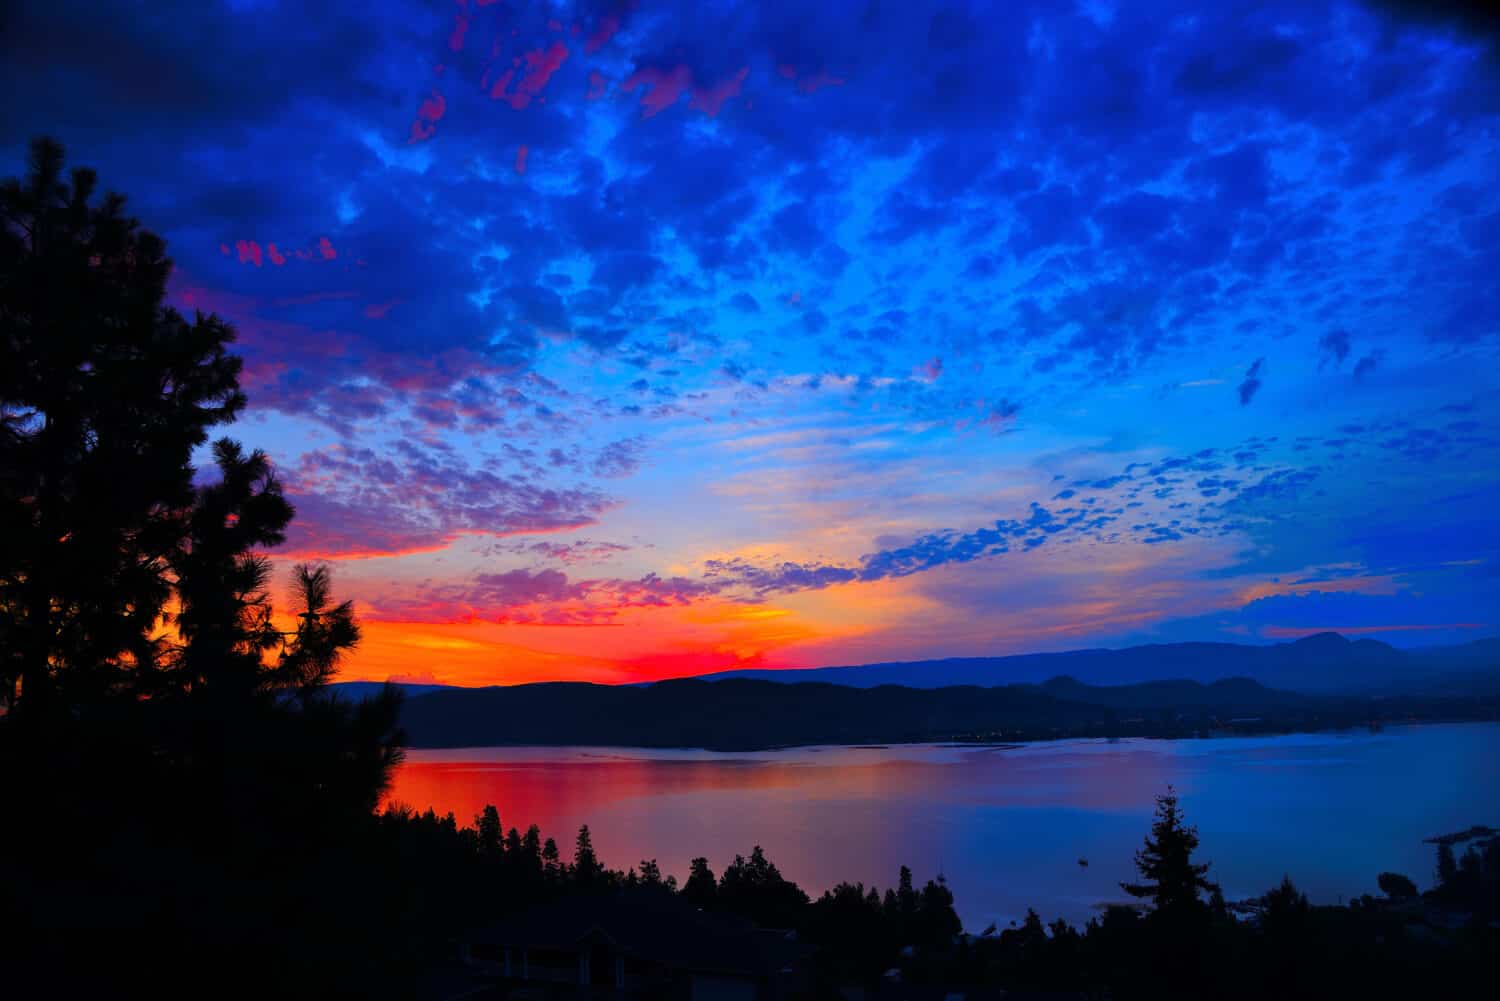 sunrise over Lake Okanagan, Kelowna B.C.